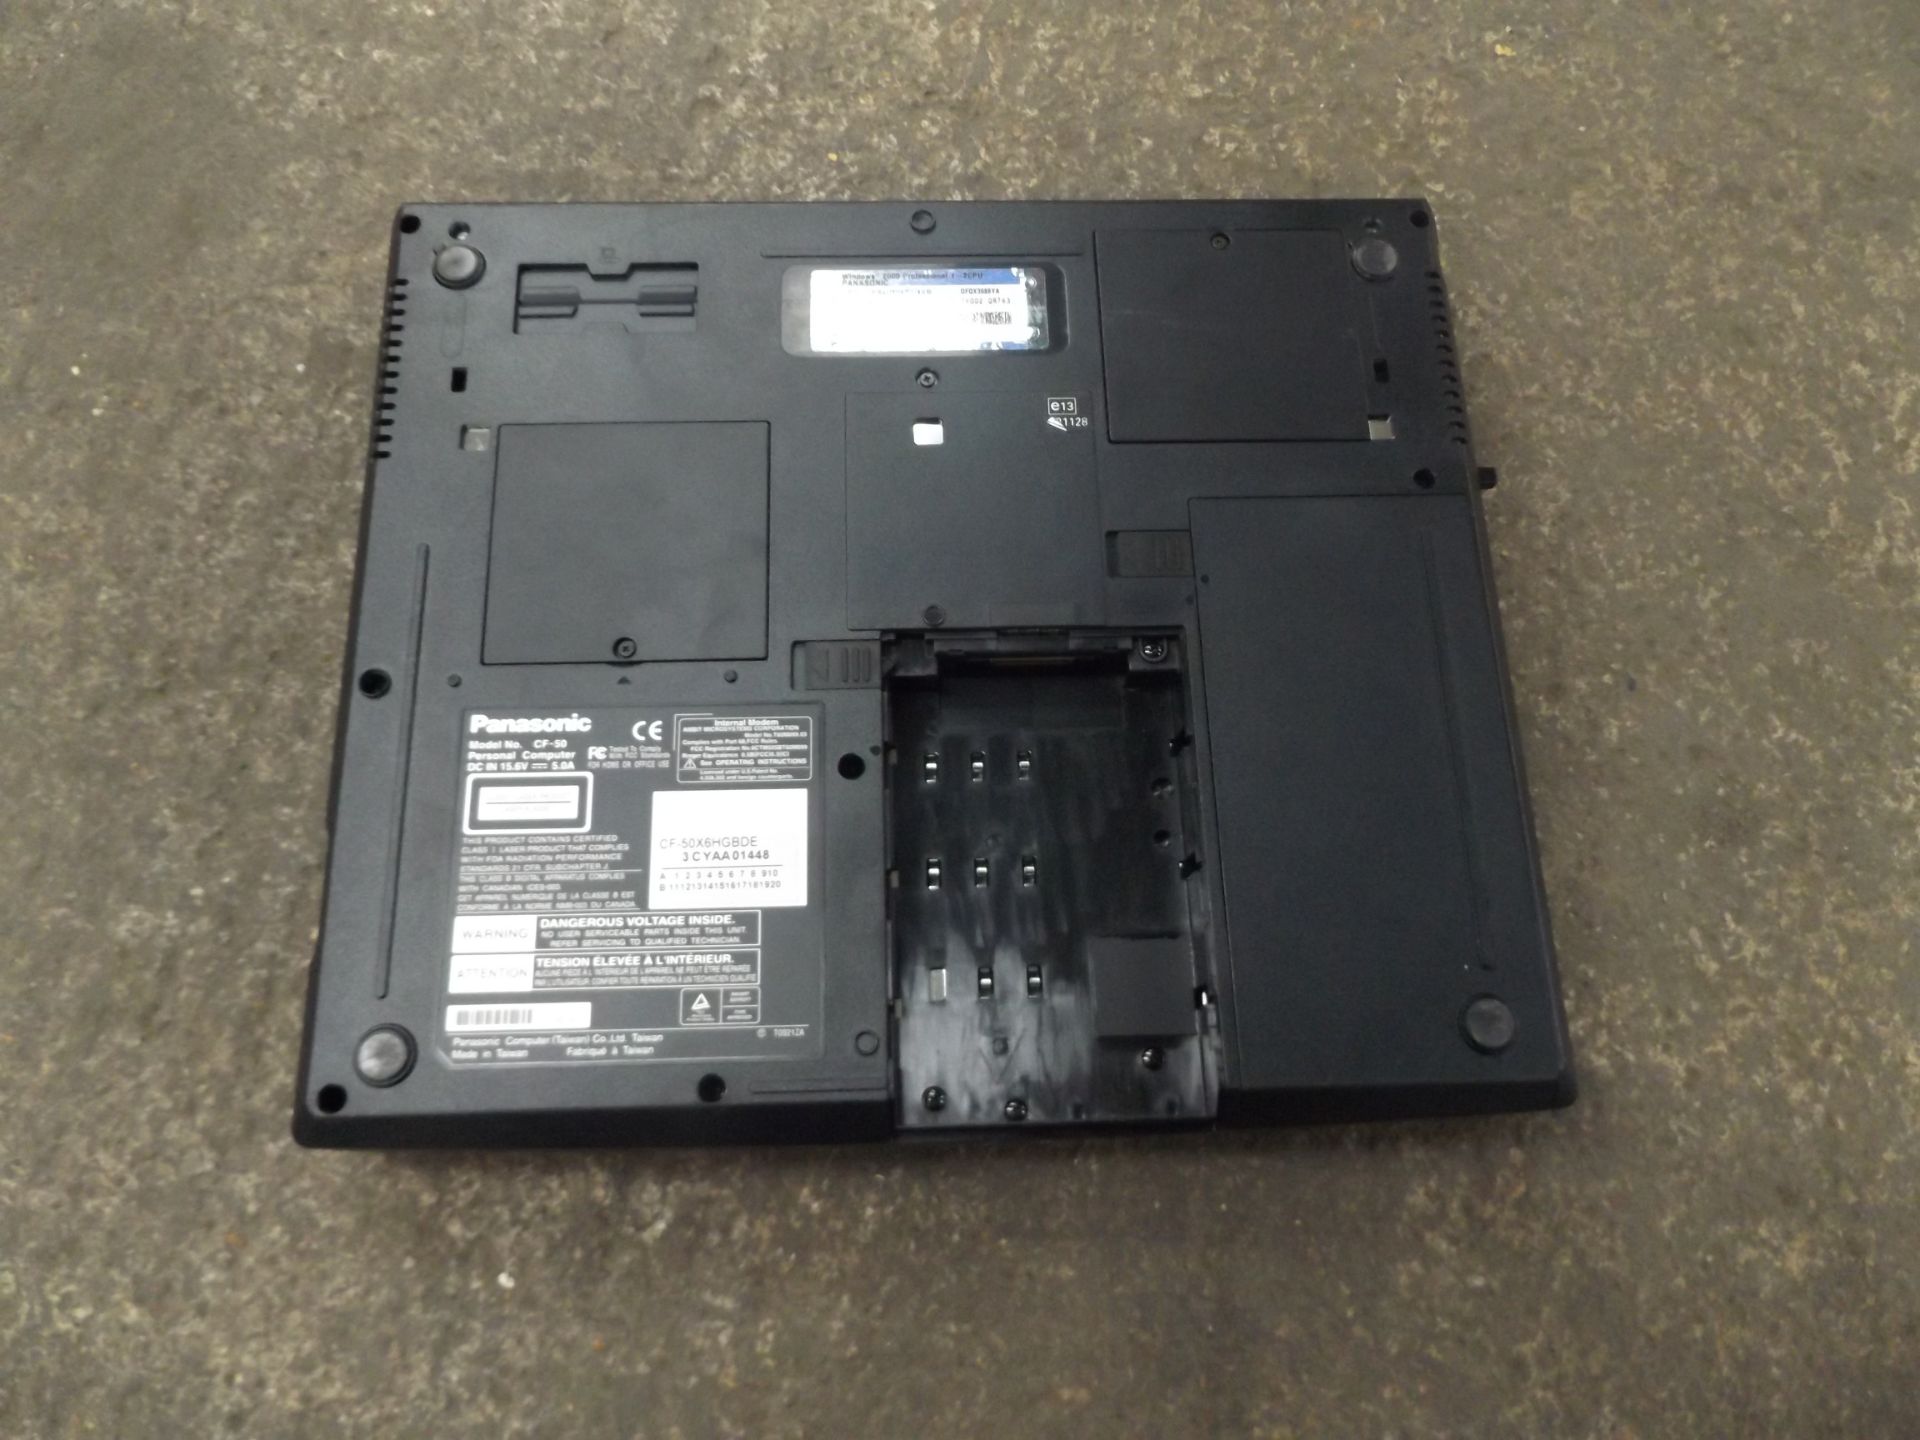 5 x Panasonic CF-50 Toughbook Laptops - Image 12 of 12